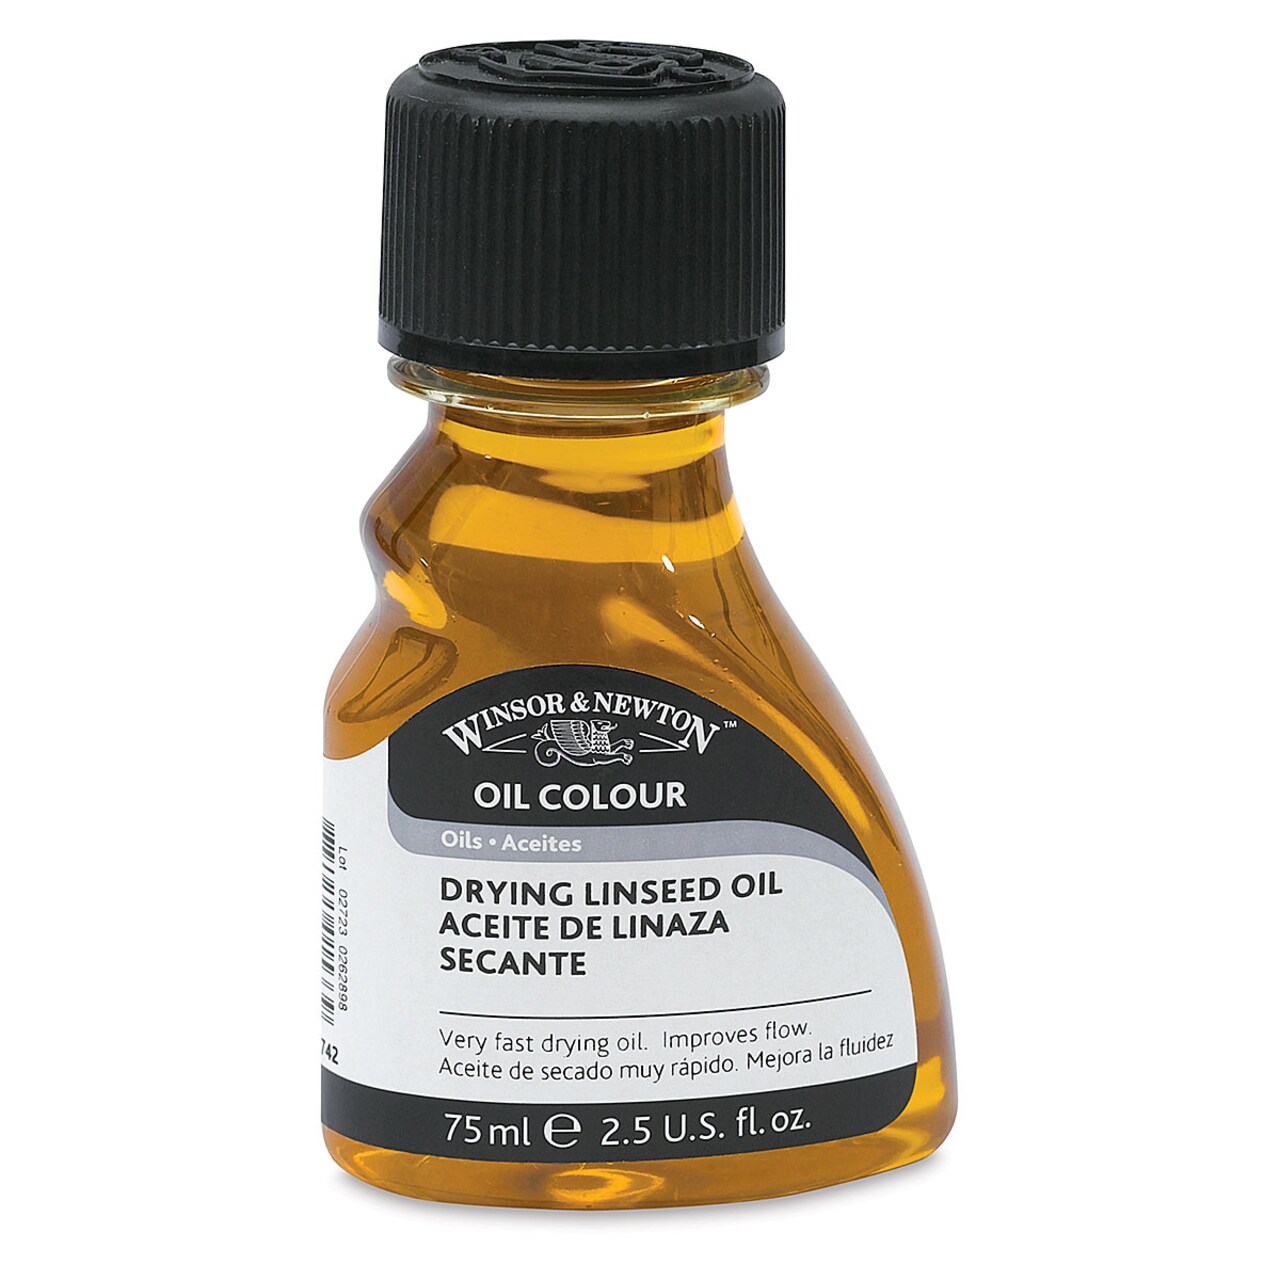 Winsor & Newton Oil Colour Medium Distilled Turpentine 500ml